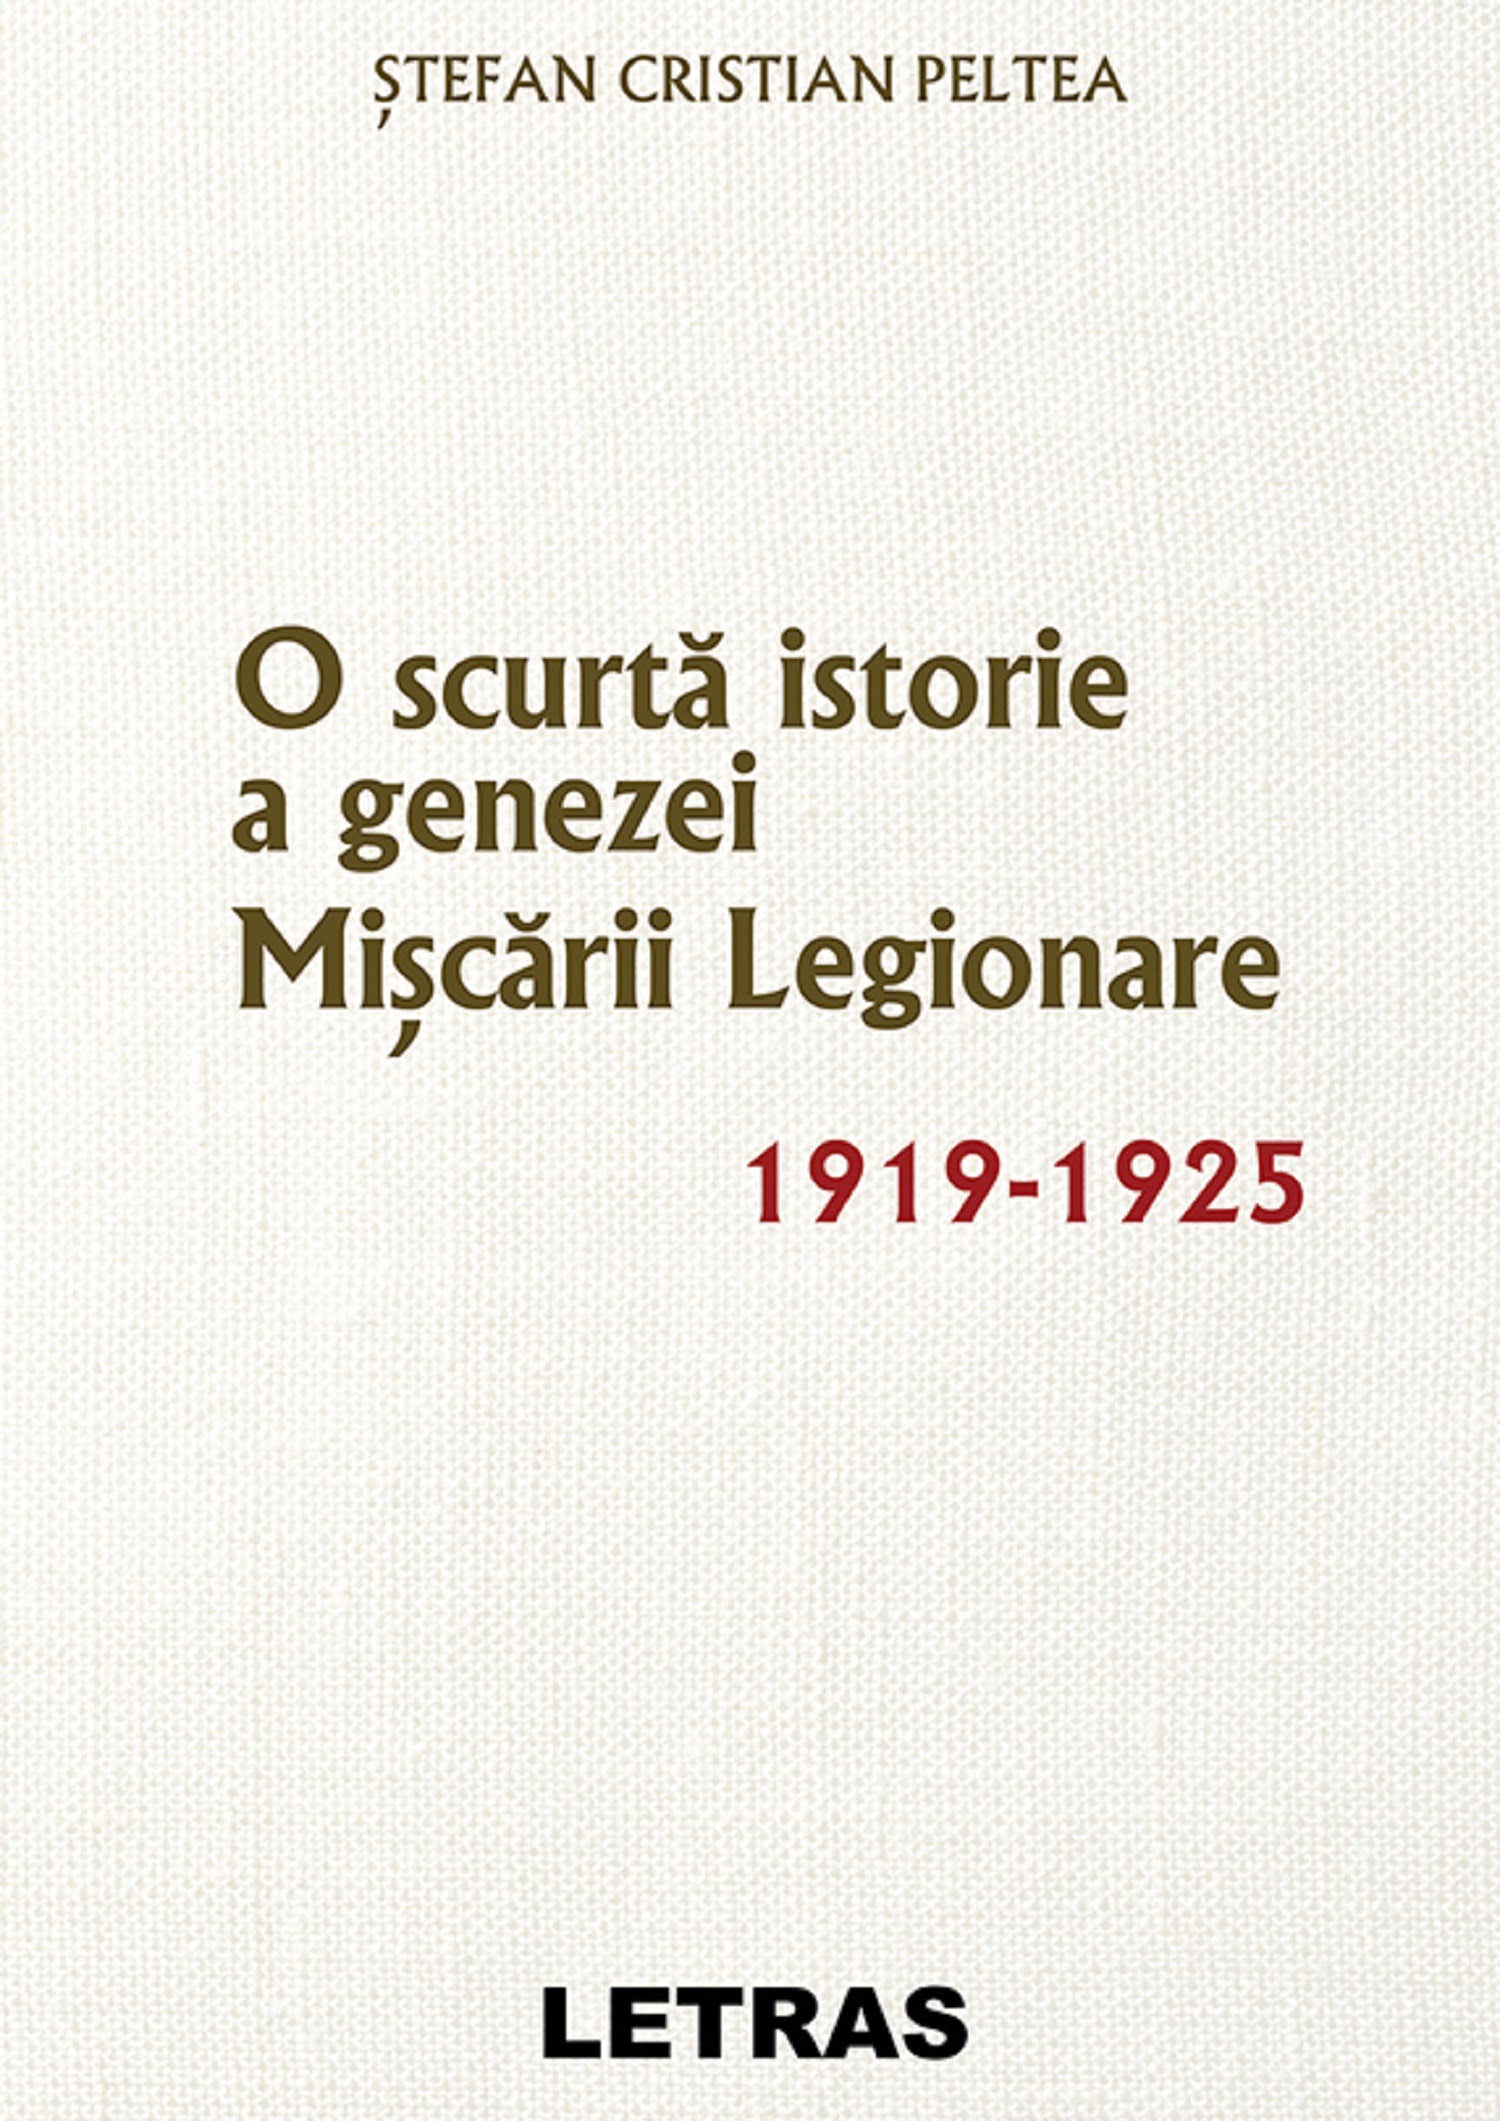 O scurt istorie a Miscarii Legionare 1919-1925